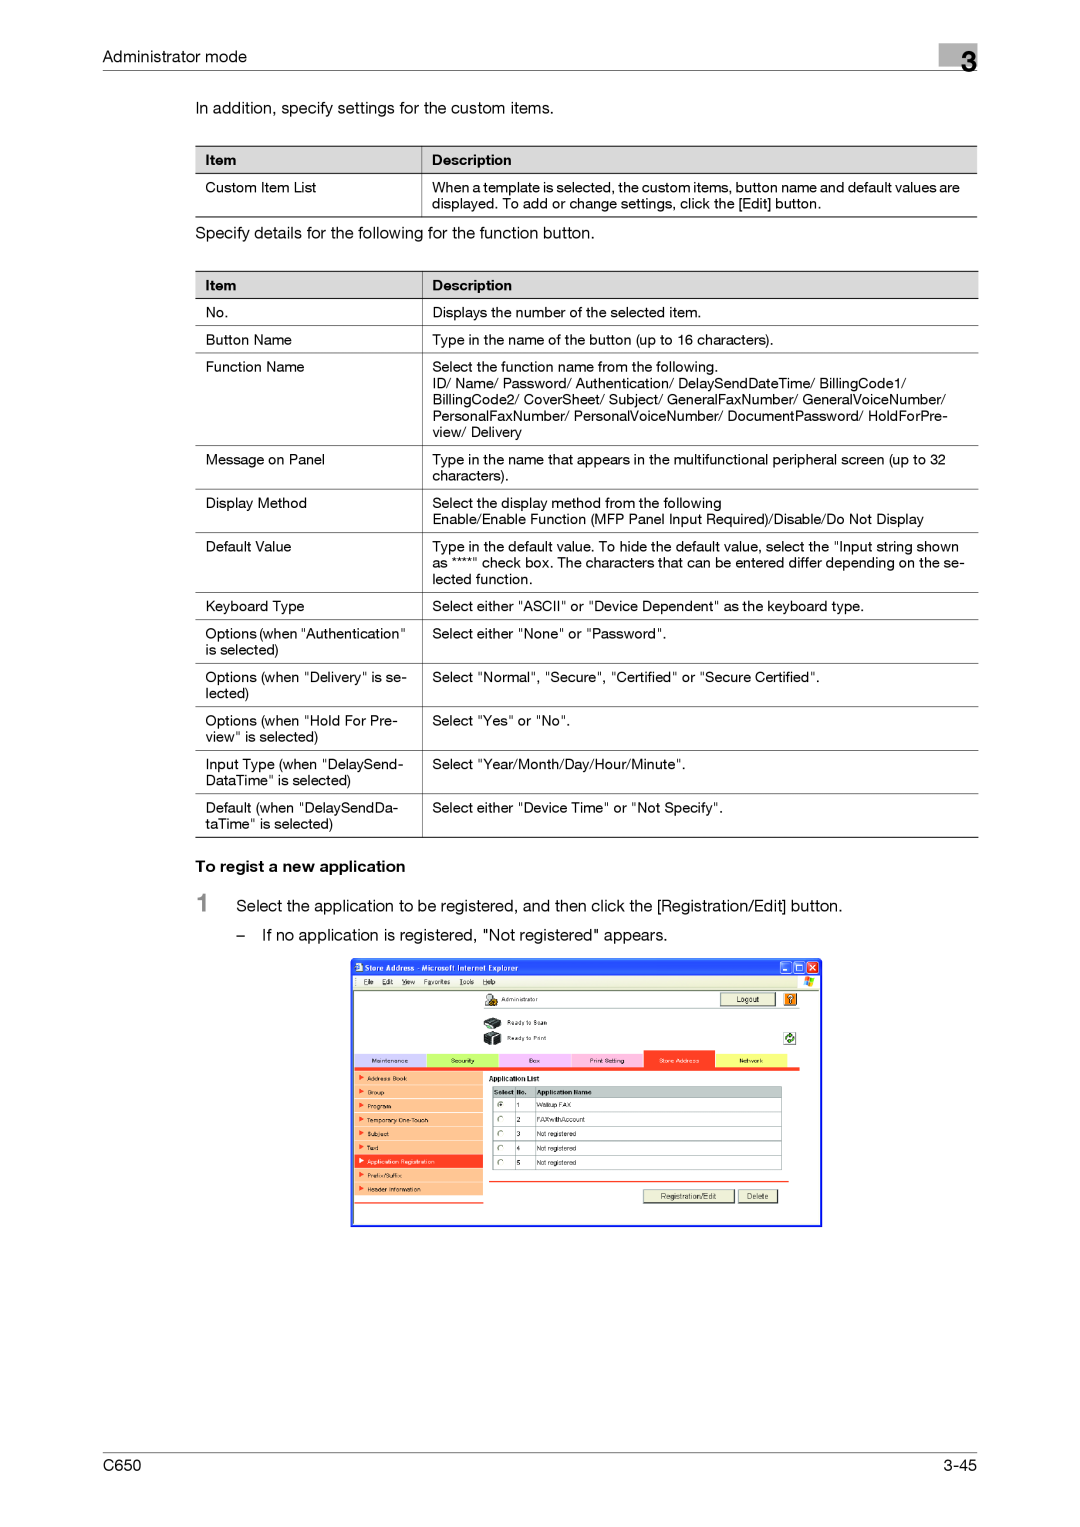 Konica Minolta C650 manual Administrator mode, To regist a new application, 3-45 